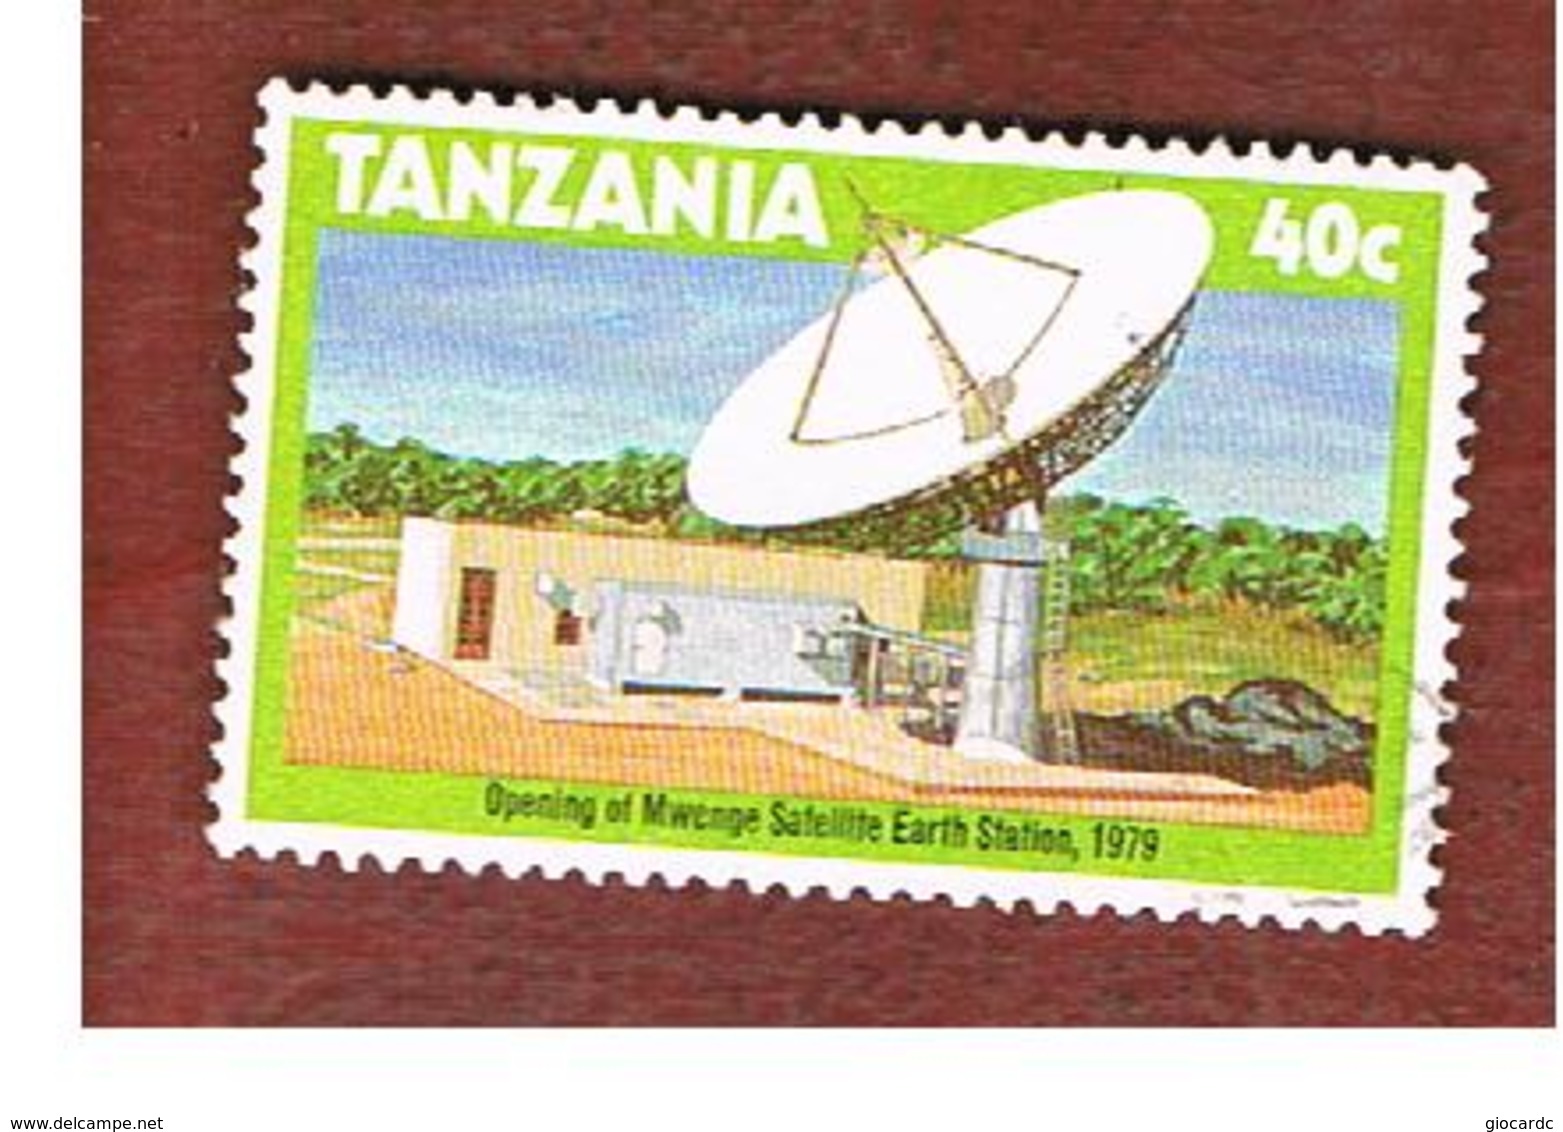 TANZANIA  -  SG 275 -  1979  MWENGE SATELLITE EARTH STATION    - USED ° - Tanzania (1964-...)